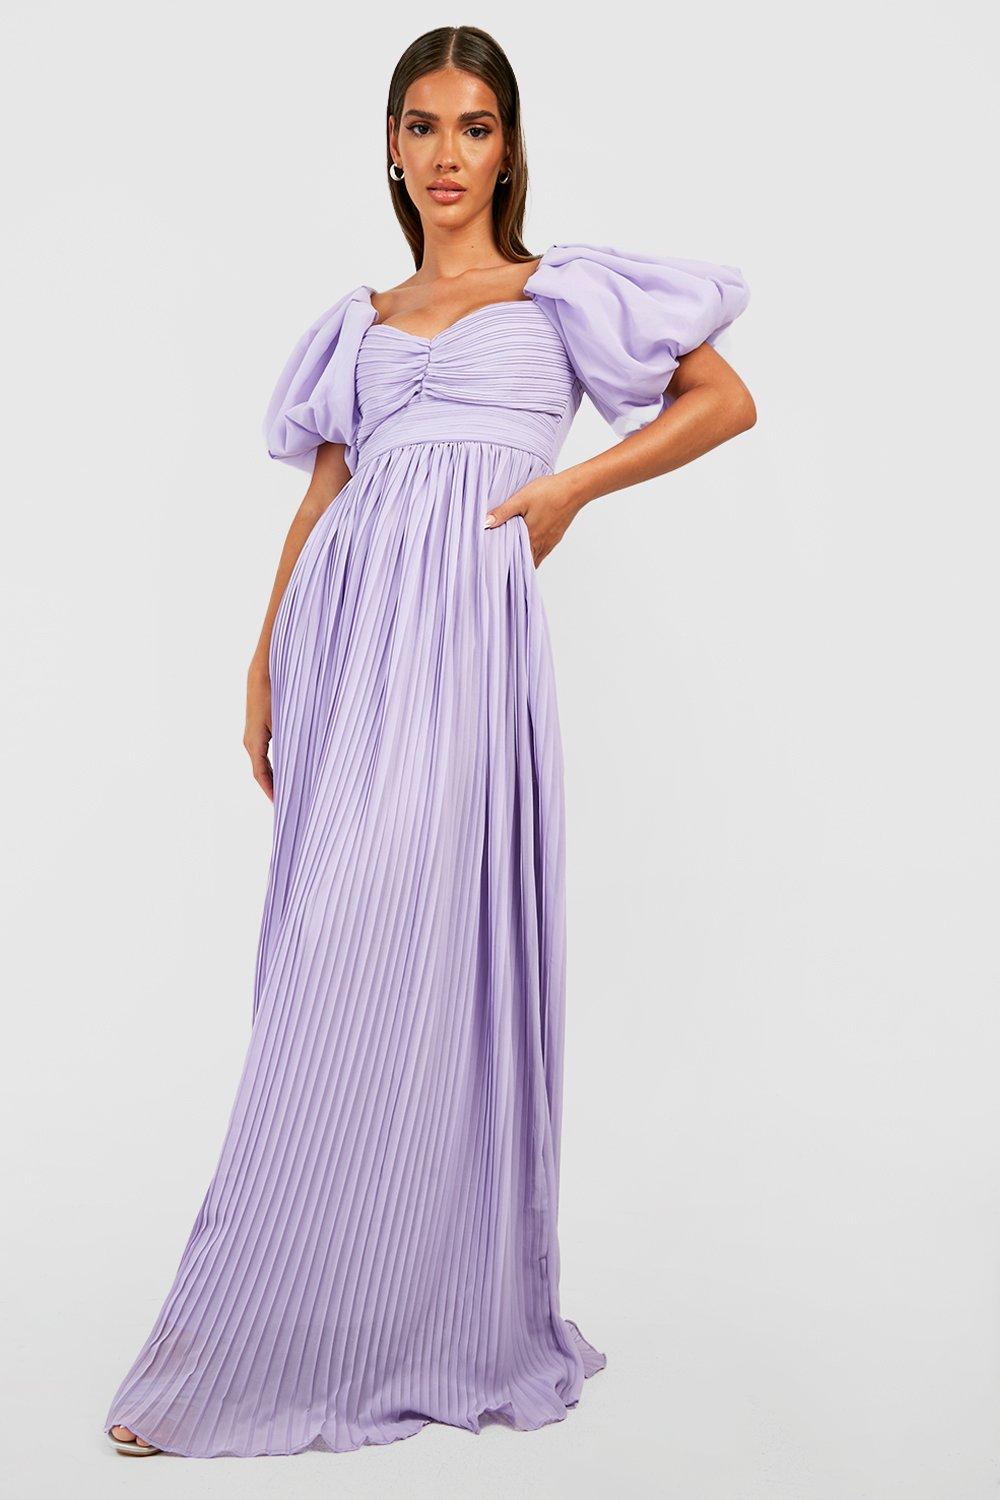 Victorian Ballgown, Evening Dress Womens Pleated Chiffon Puff Sleeve Maxi Dress - Purple - 10 $38.00 AT vintagedancer.com